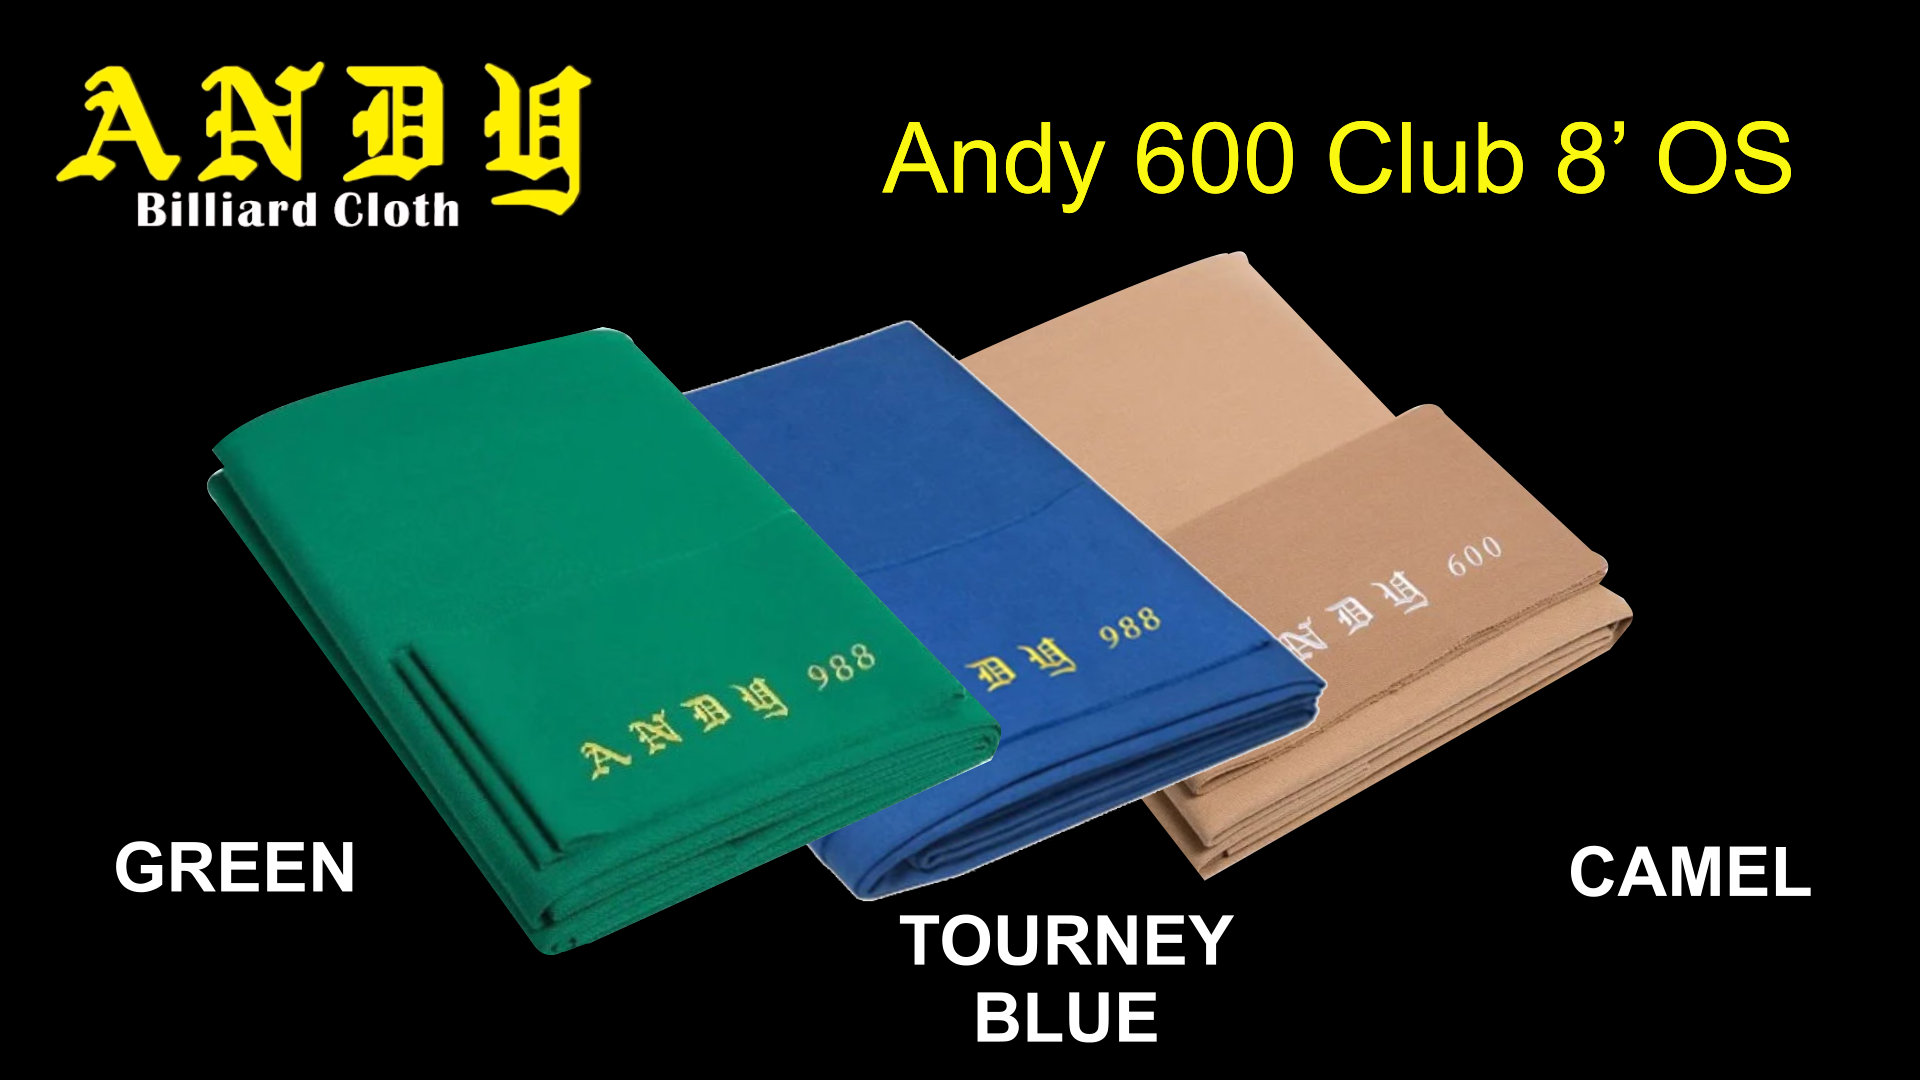 andy 600 club 8